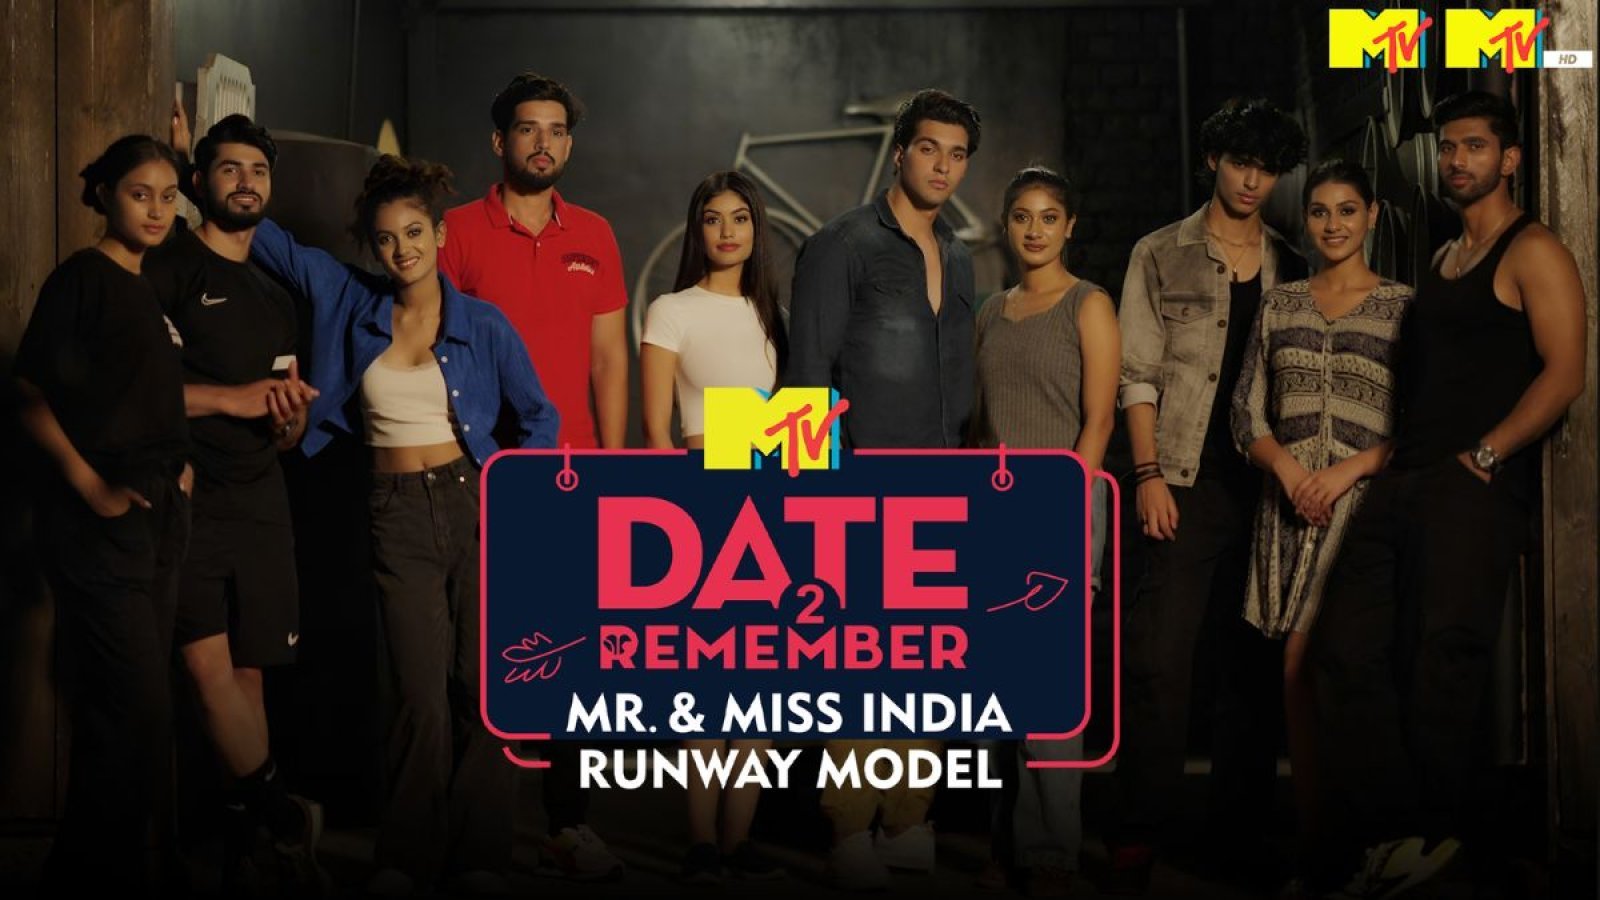 Love Takes New Runway: Umar Riyaz and Akanksha Puri will host MTV’s upcoming show Date2Remember Mr and Miss Runway Model